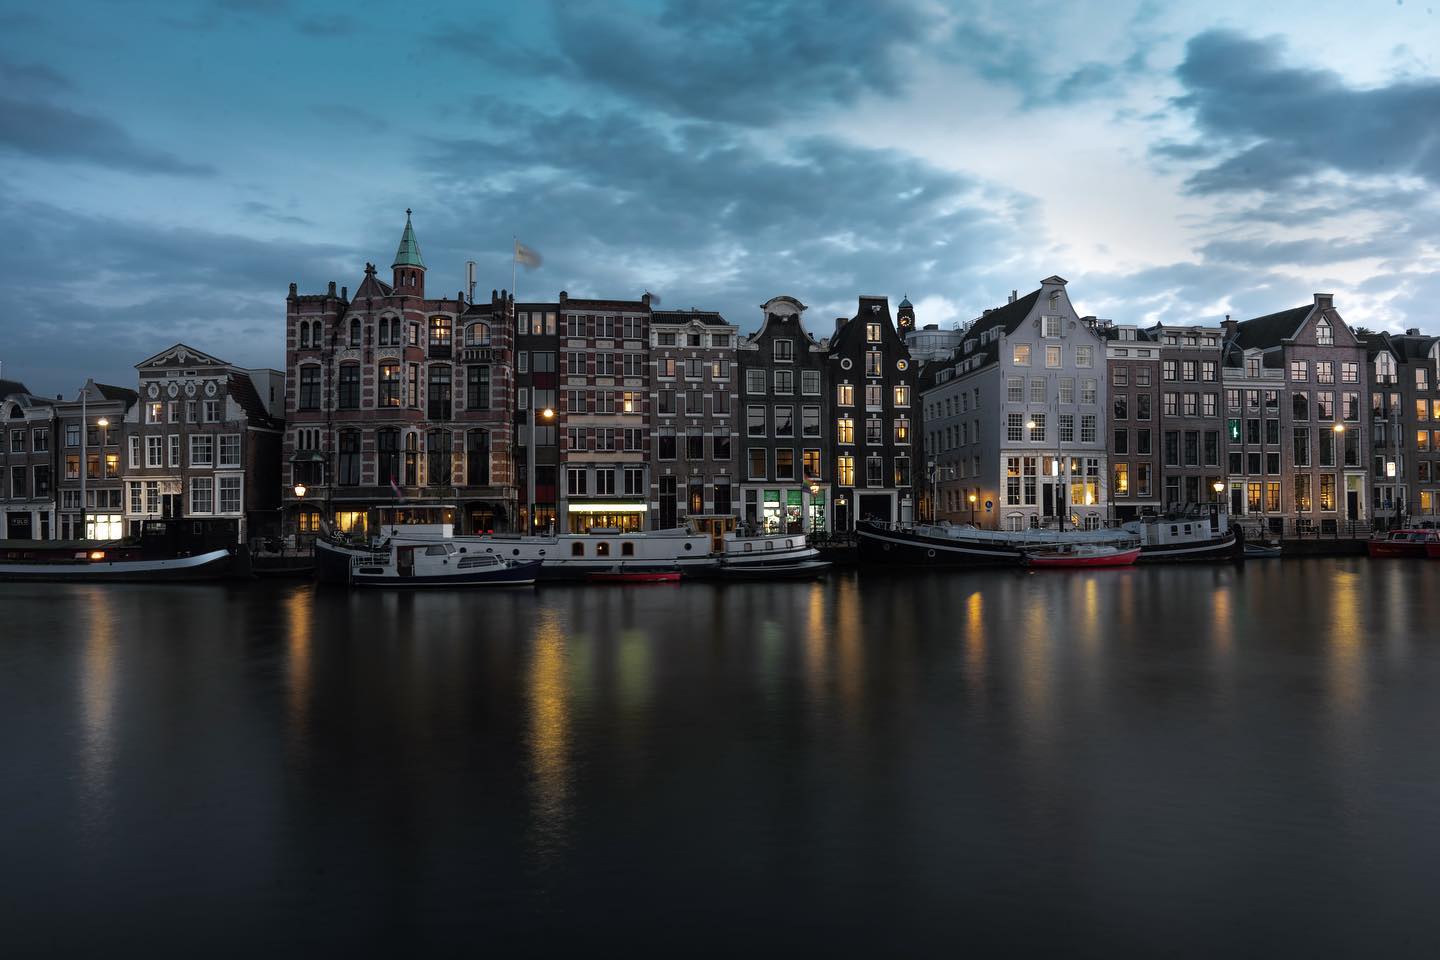 Summer evening in Amsterdam, Netherlands
.
.
.
#igholland
#amsterdam 
#netherlands_captured 
#createexplore 
#reflectiongram 
#ig_holland
#bestofnetherlands
#reflection_shotz 
#longexpolite
#holland_netherland
#zuidholland
#zoom_nl
#zuidhollandslandschap
#cameranu_nl
#agameoftone 
#longexpoelite 
#hollandphotos
#spiegeling
#natuurmonumenten
#heelholland_fotografeert
#ig_discover_holland
#ig_discover_netherlands
#superholland
#super_holland
#dernederlanden
#hollandphotolovers
#holland_photolovers
#zoomnl
#zonsondergang 
#mooieluchten
@wanderforever_ @thewander.co @sharegermany @moodygrams @stayandwander @visualsofearth  @earthpix @seefreunde @stayandwander @visualvibesgermany @grmnyvacations